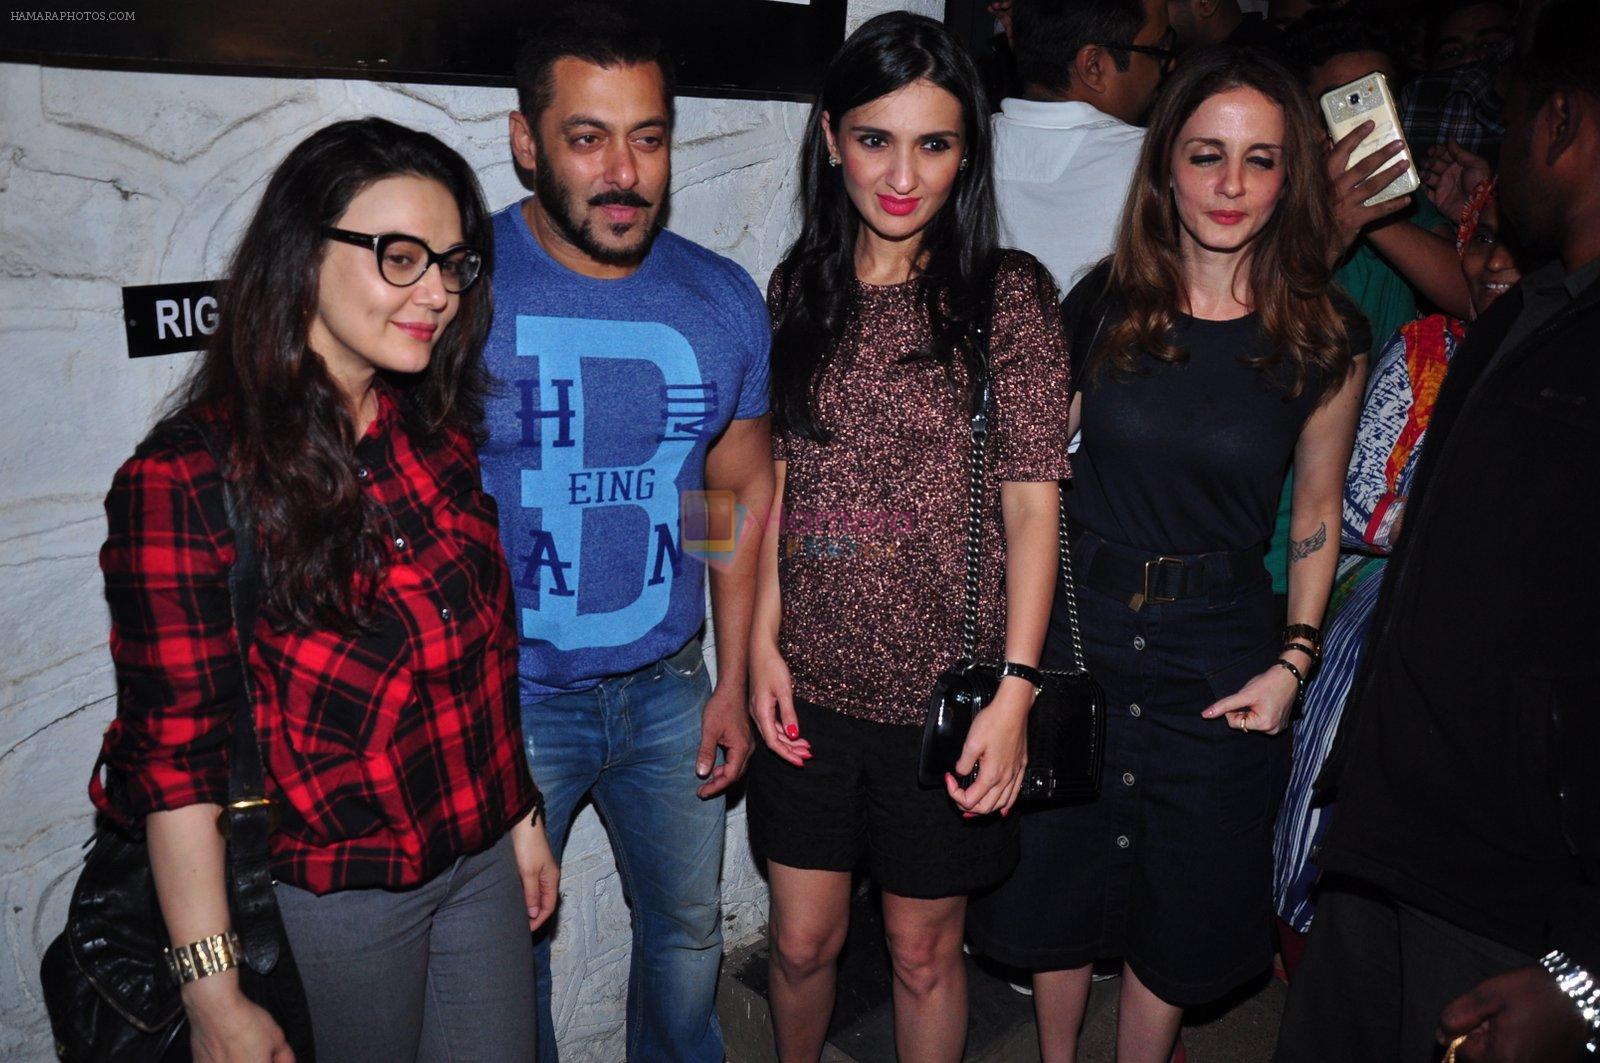 Salman Khan, Preity Zinta, Anu Dewan, Suzane Khan at The Korner House on 4th Feb 2016